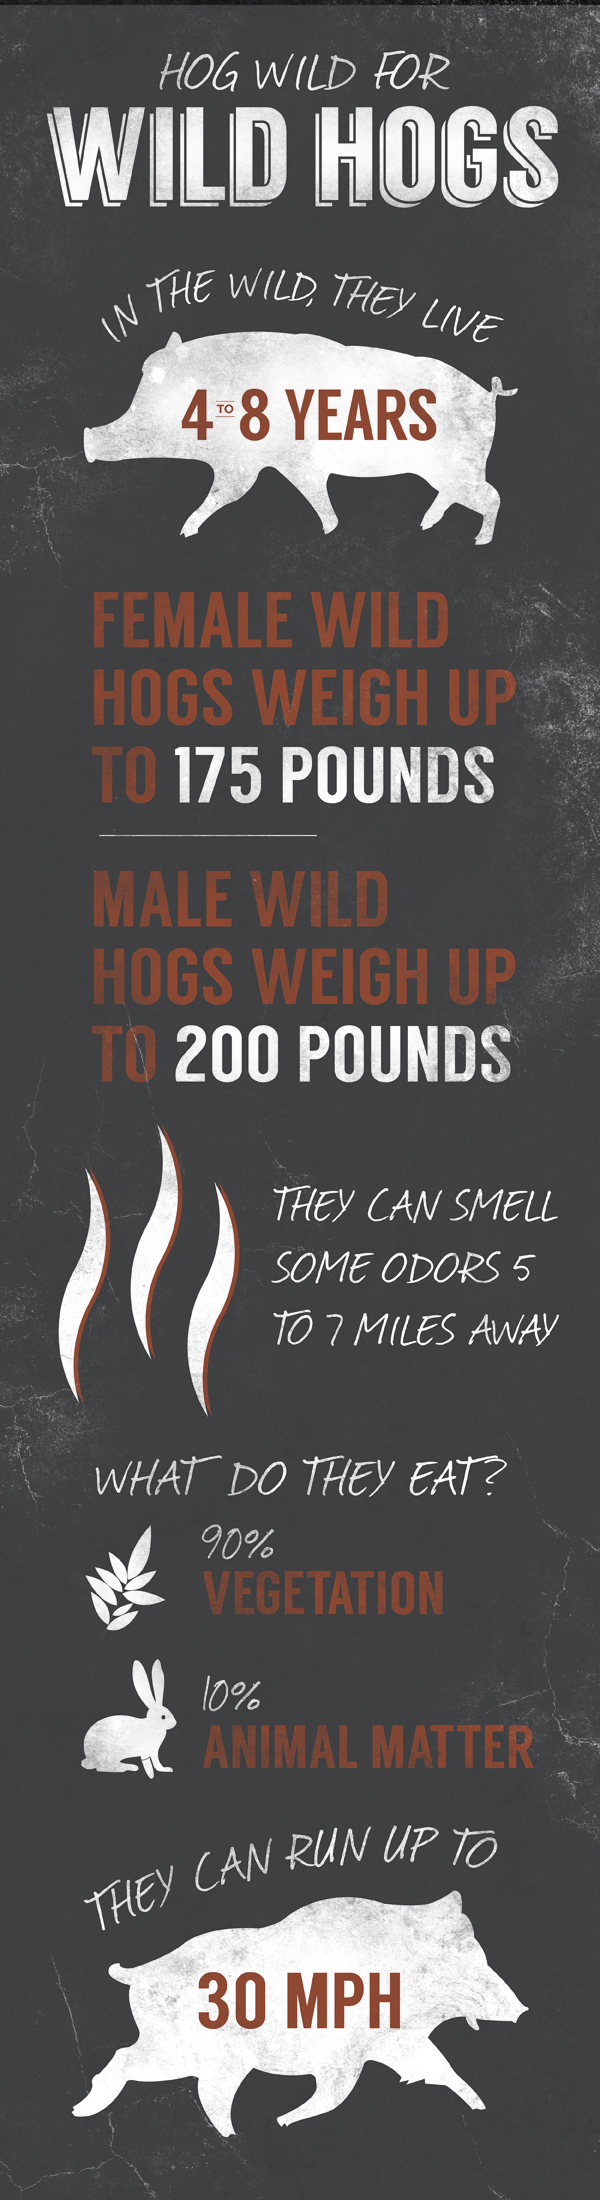 Wild Hogs Infographic